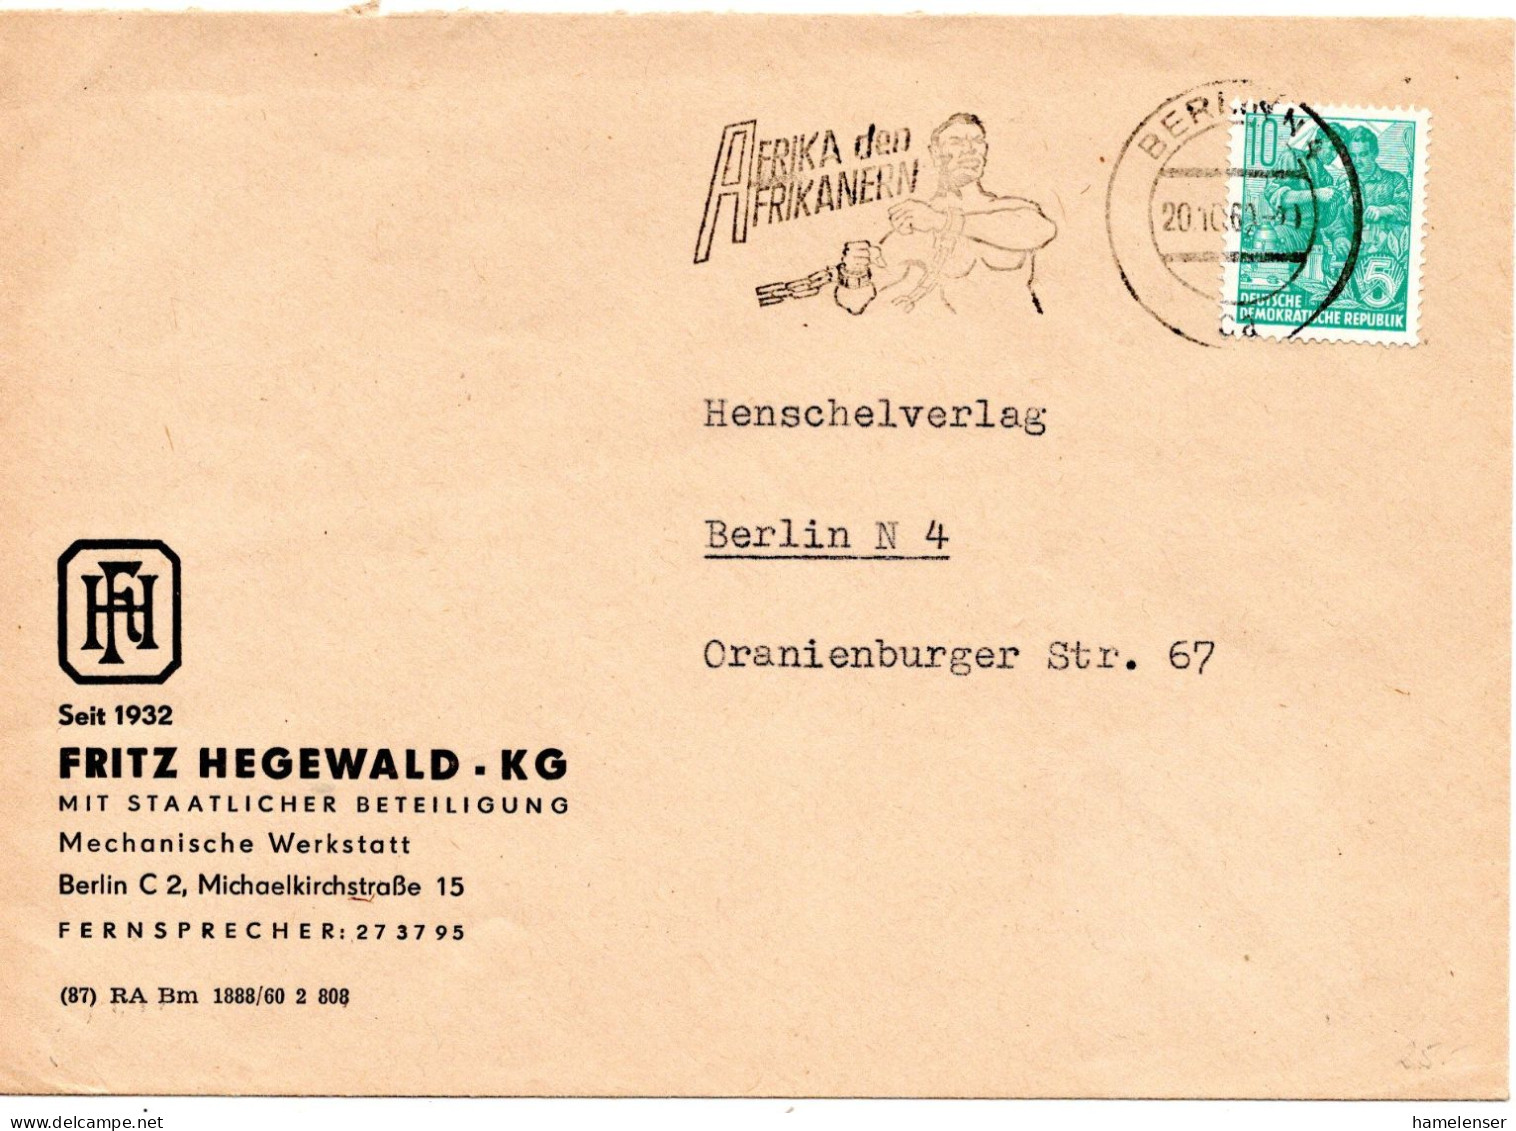 63044 - DDR - 1960 - 10Pfg Fuenfjahrplan EF A OrtsBf BERLIN - AFRIKA DEN AFRIKANERN - Briefe U. Dokumente